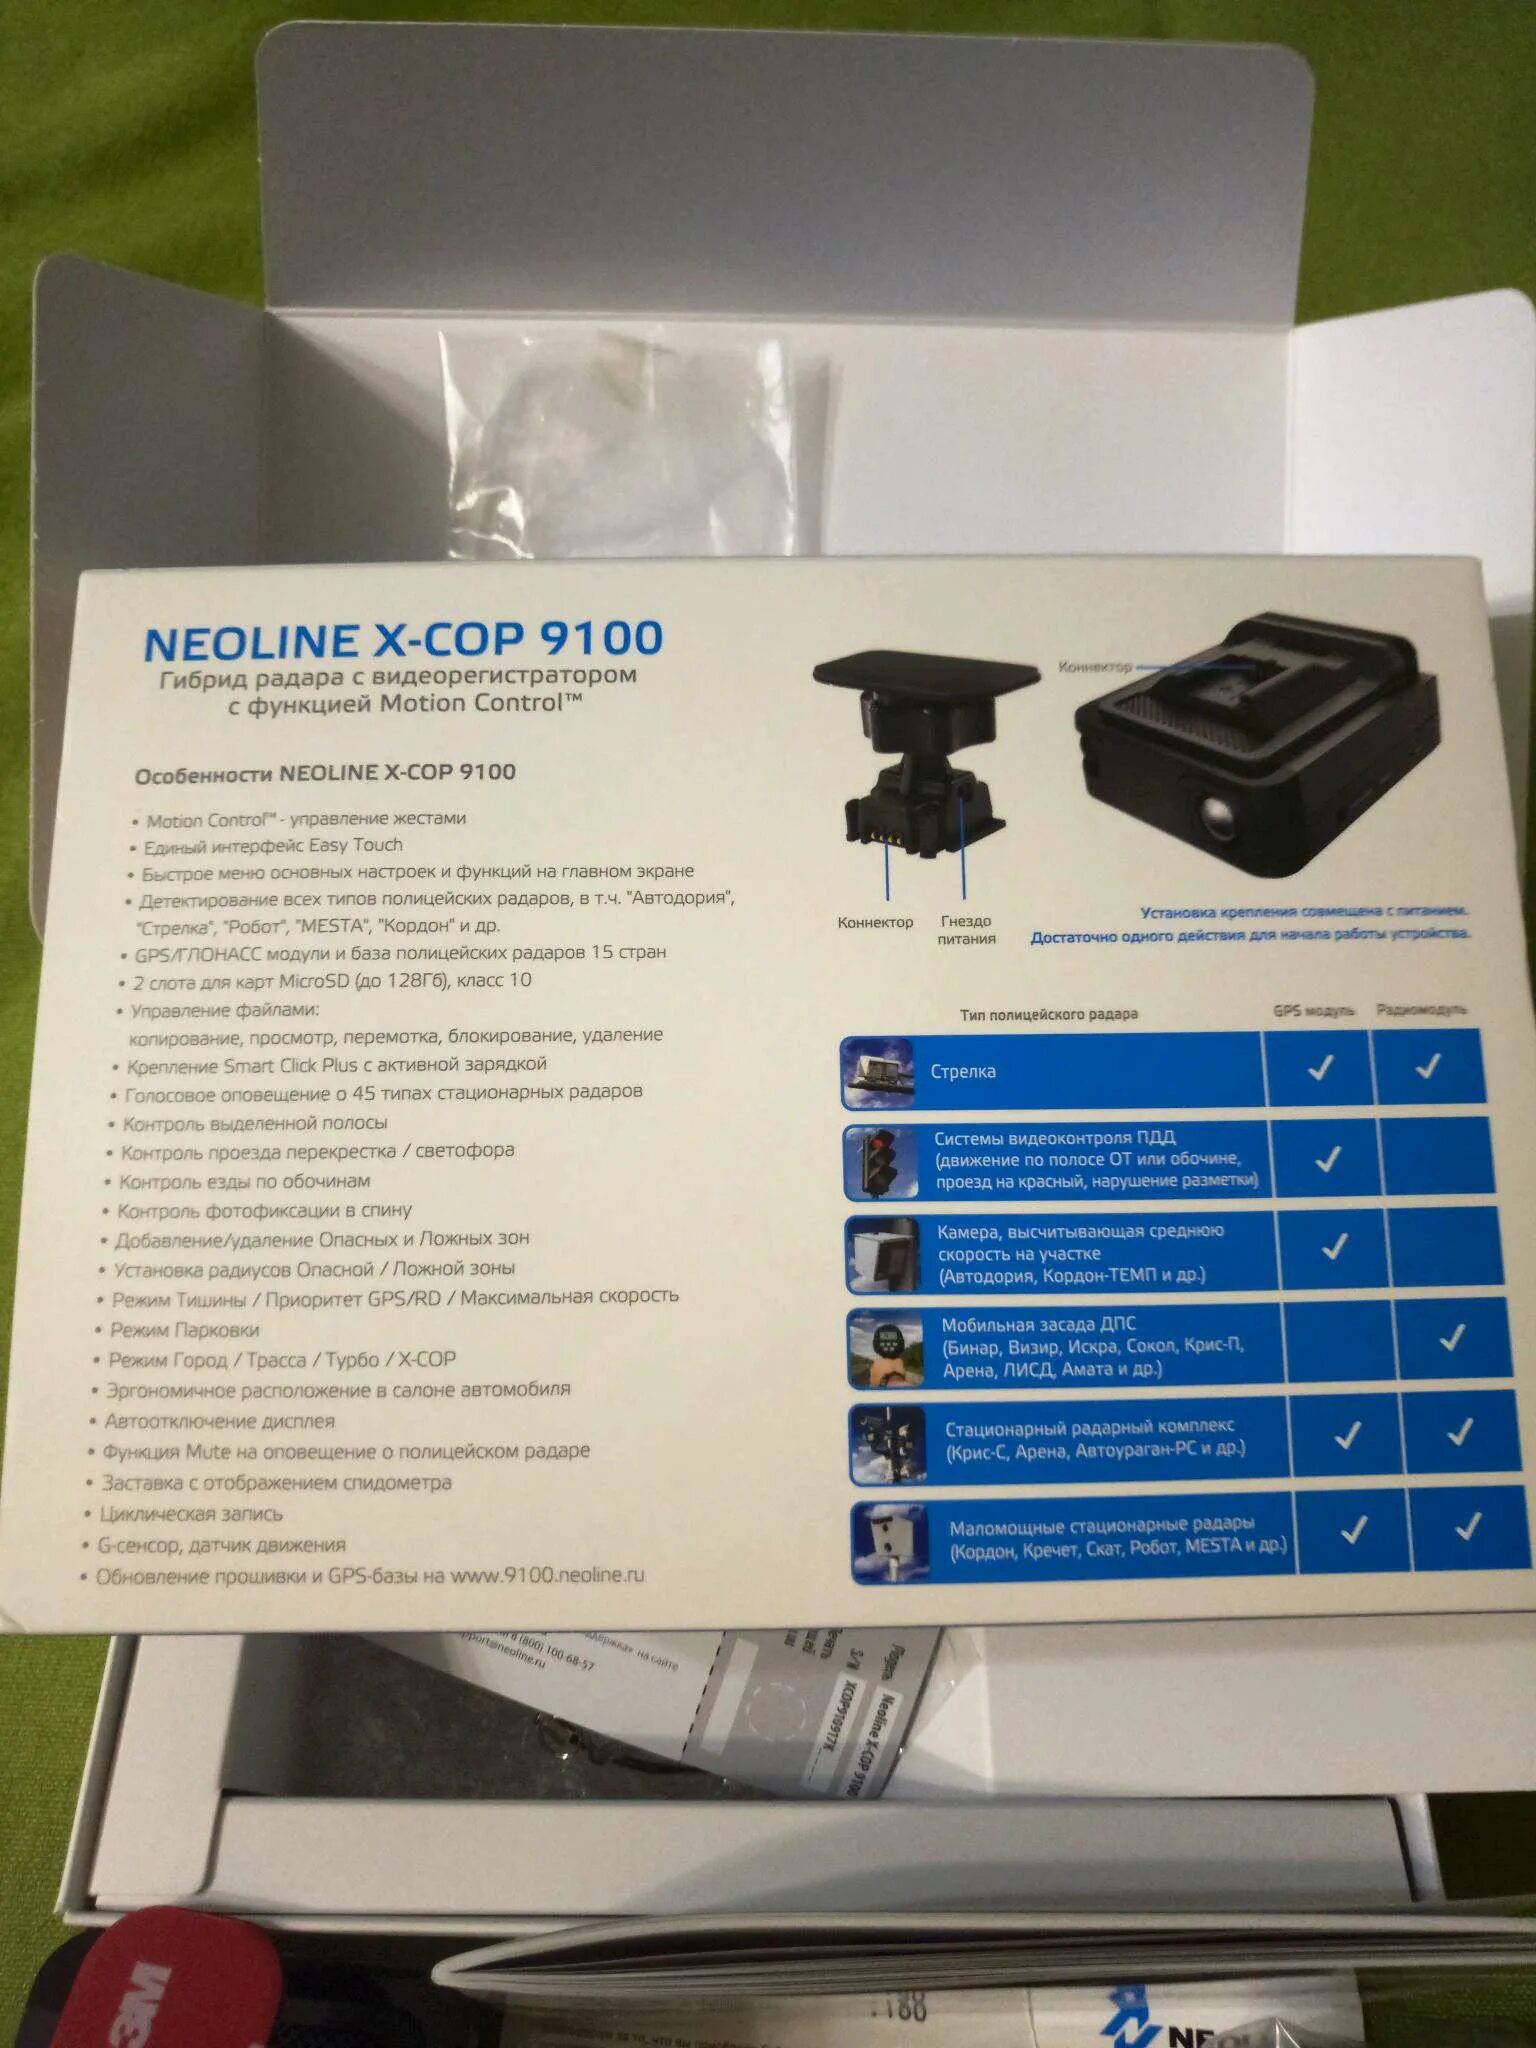 Neoline x cop 9100c. Регистратор Неолайн 9100. Neoline x-cop 9100x. Плата с модулем GPS для видеорегистратора Neoline x-cop 9100 (MK-120g). Neoline x-cop 9100 GPS модуль.